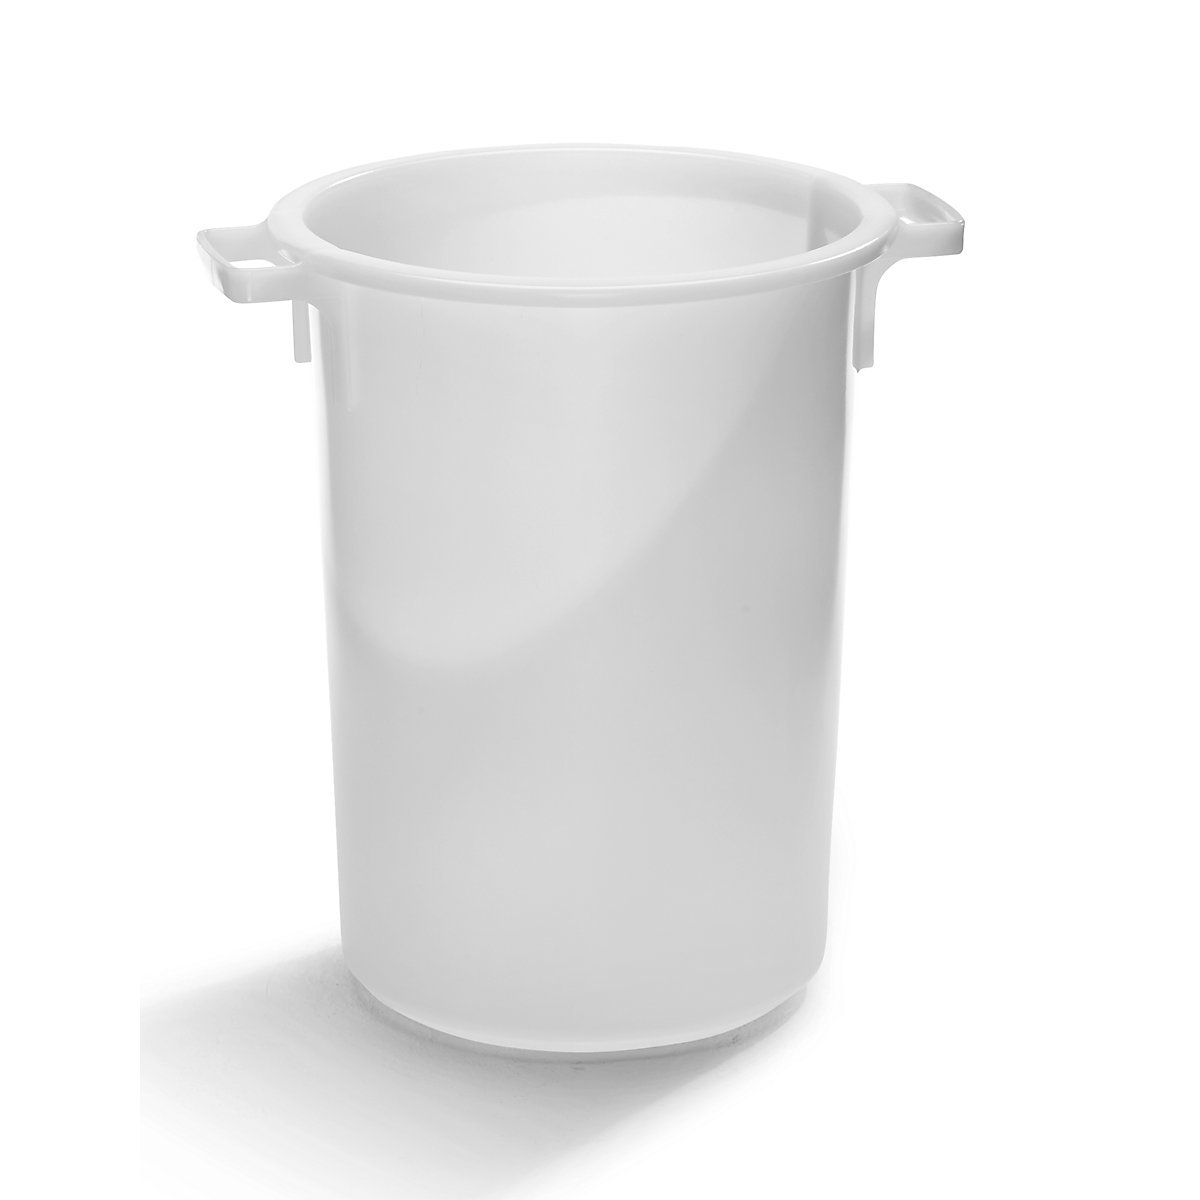 Cylindrical bin made of HDPE, food safe